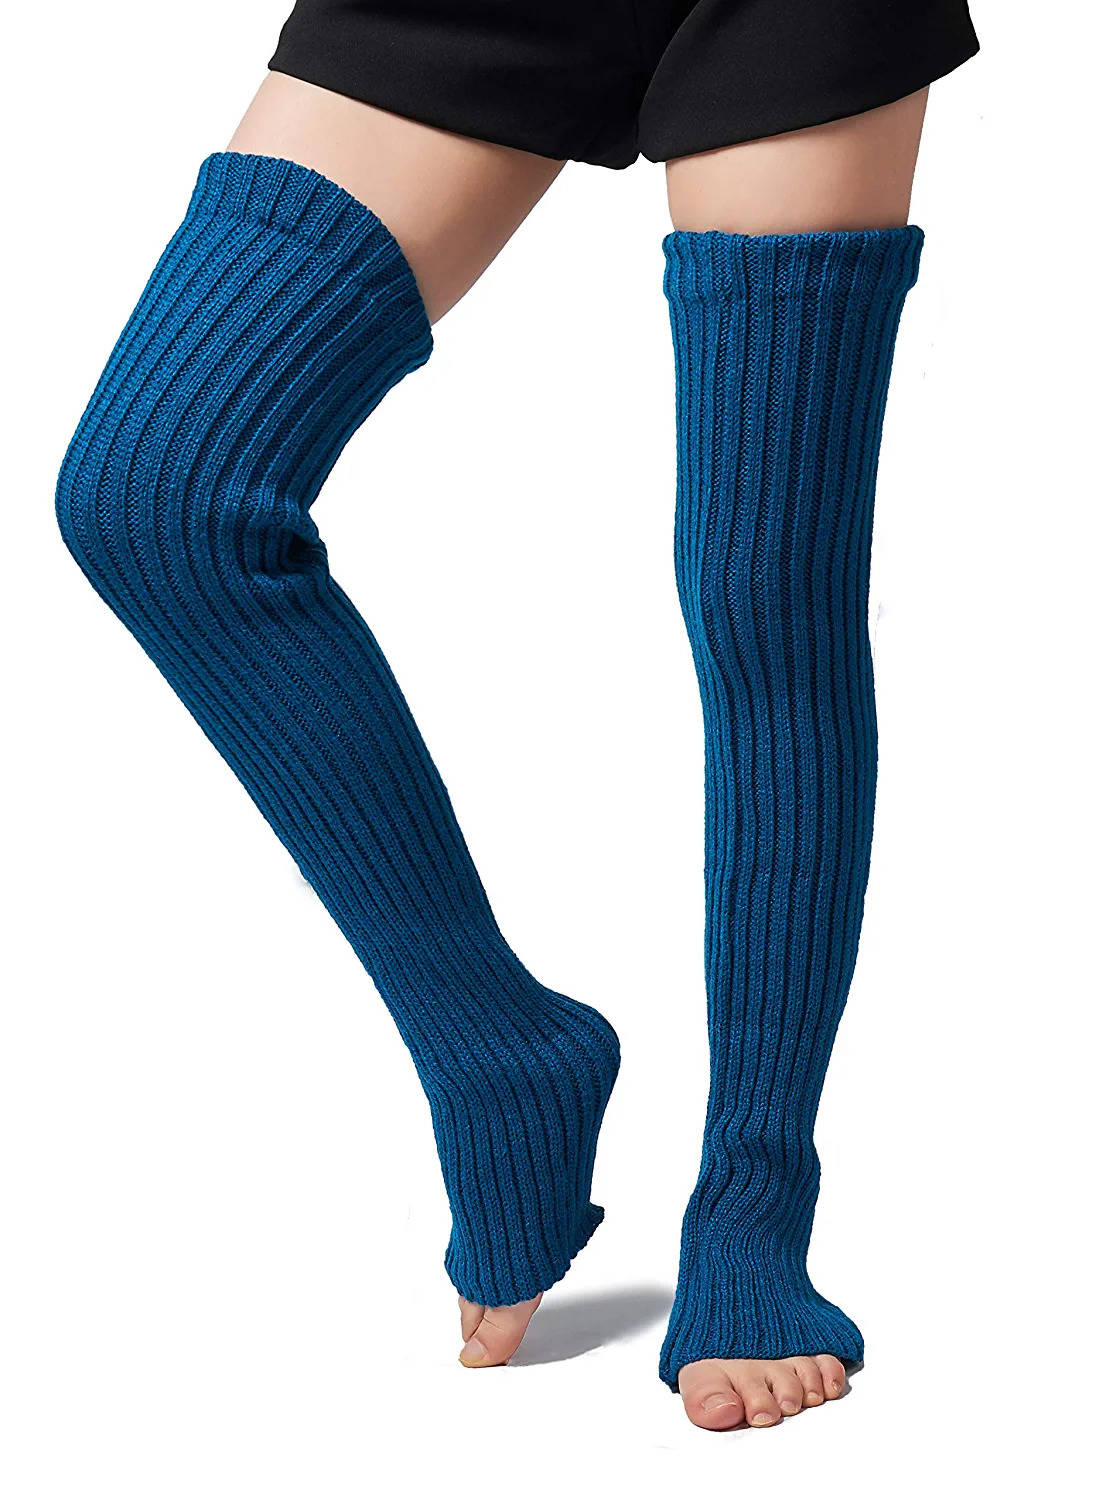 Long socks for Women: 8 Best Long Socks for Women to Keep You Warm and ...